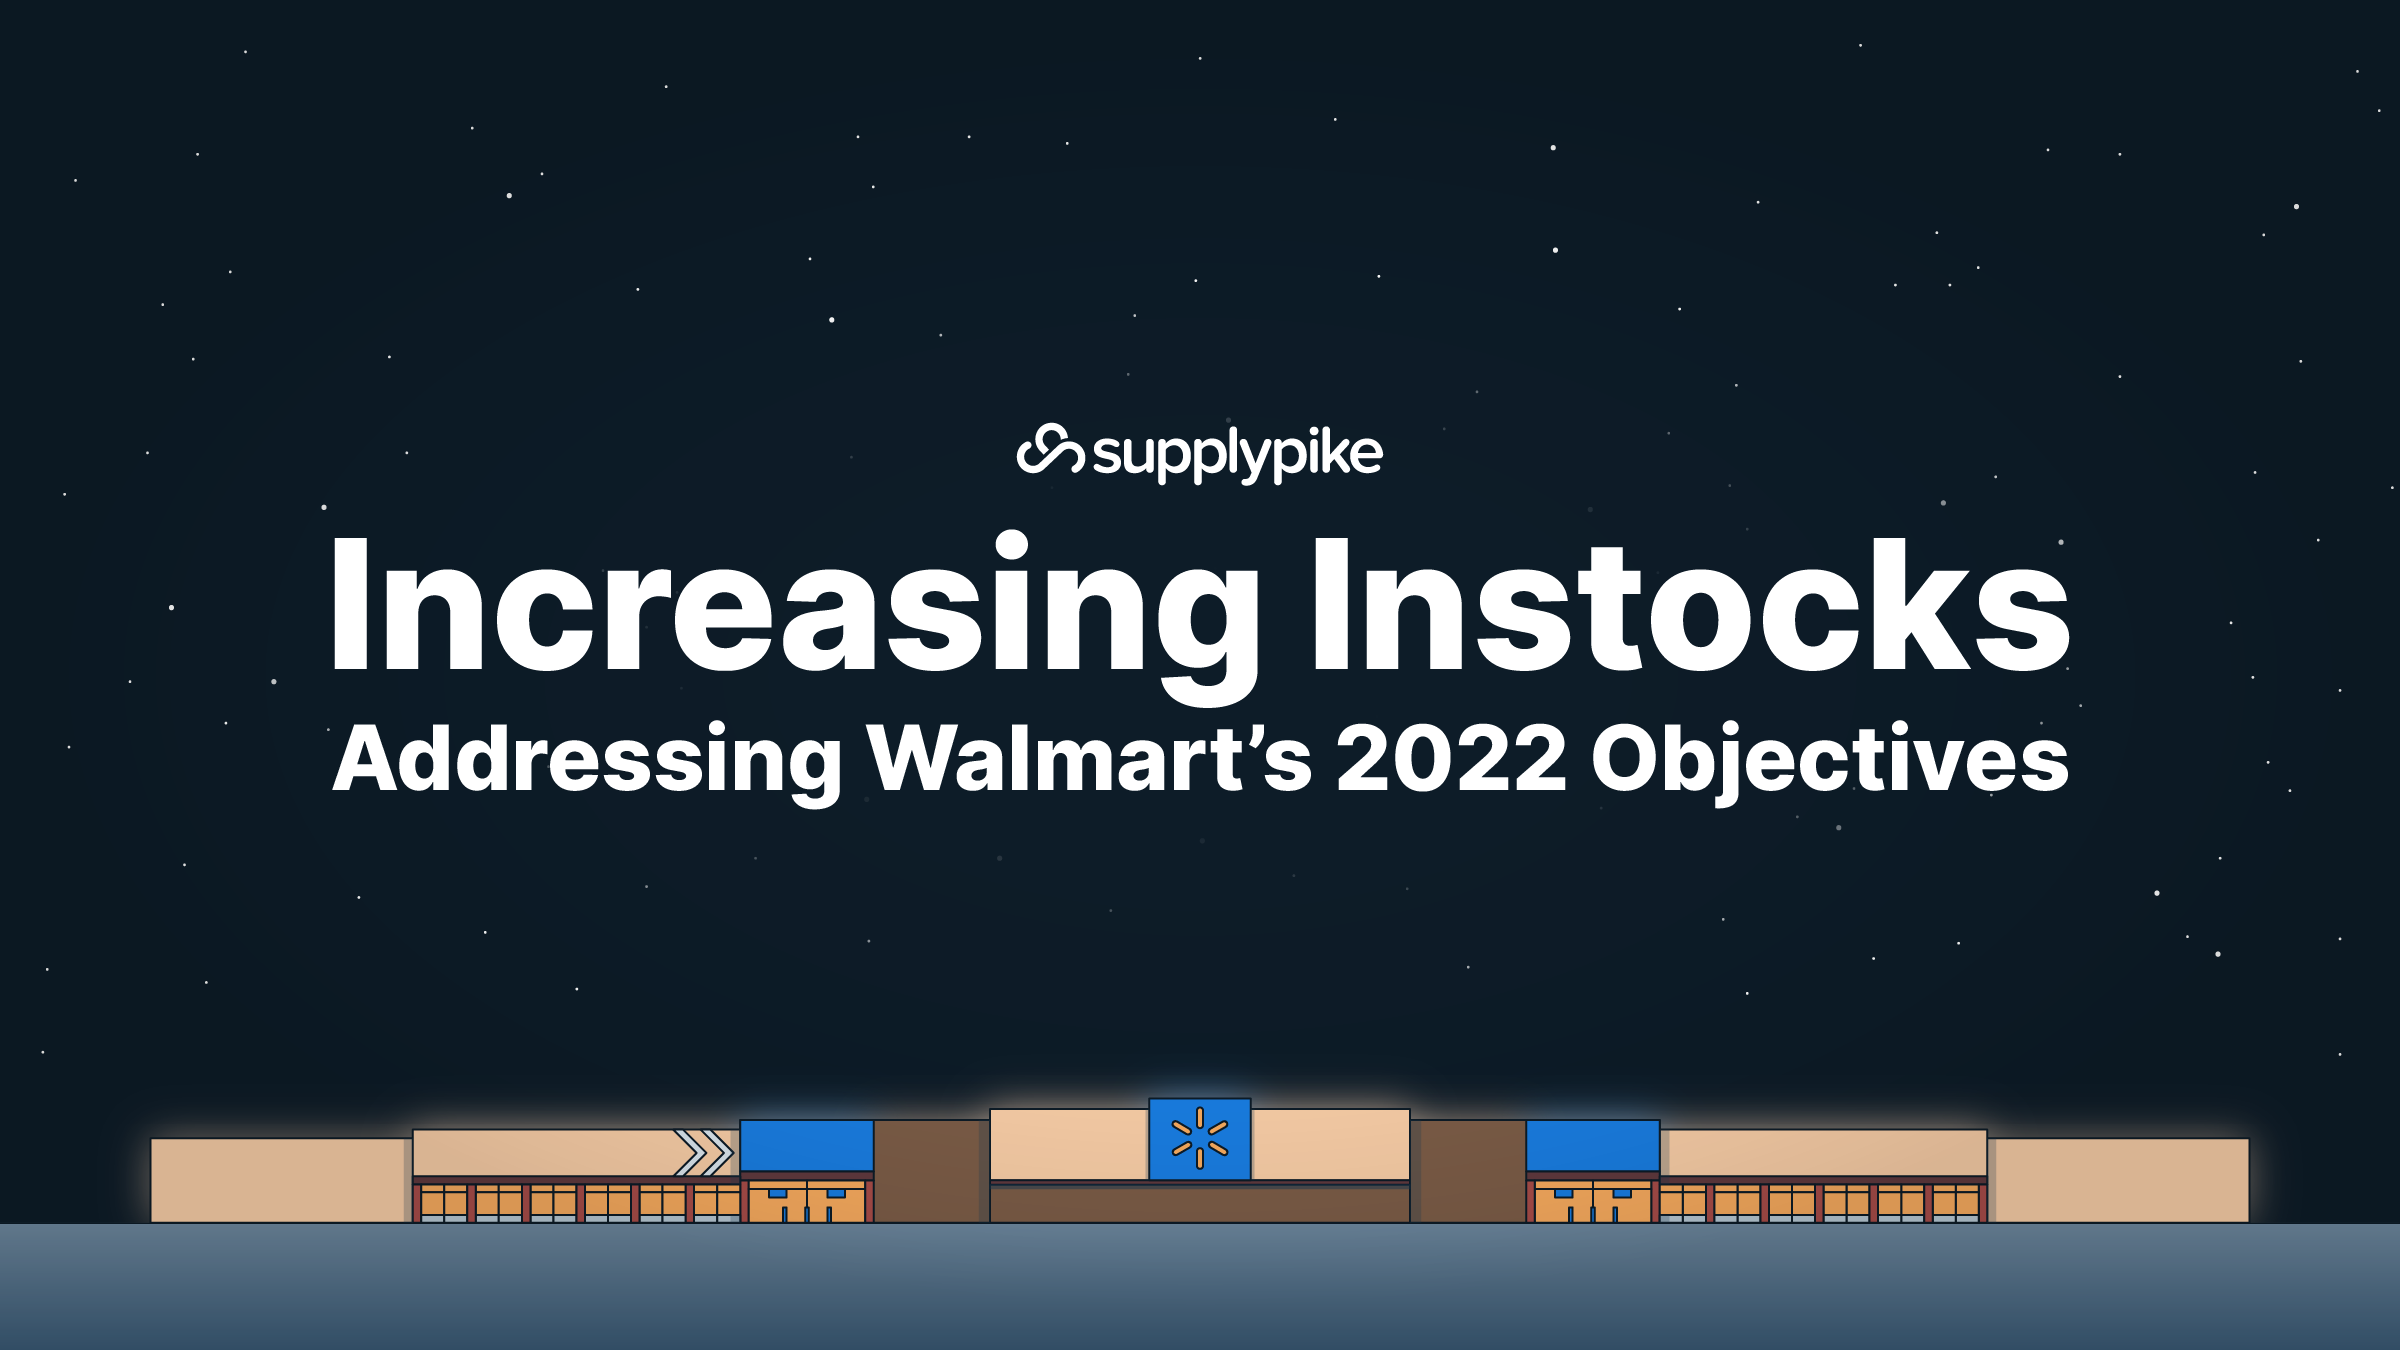  Increasing Instocks: Addressing Walmart’s 2022 Objectives